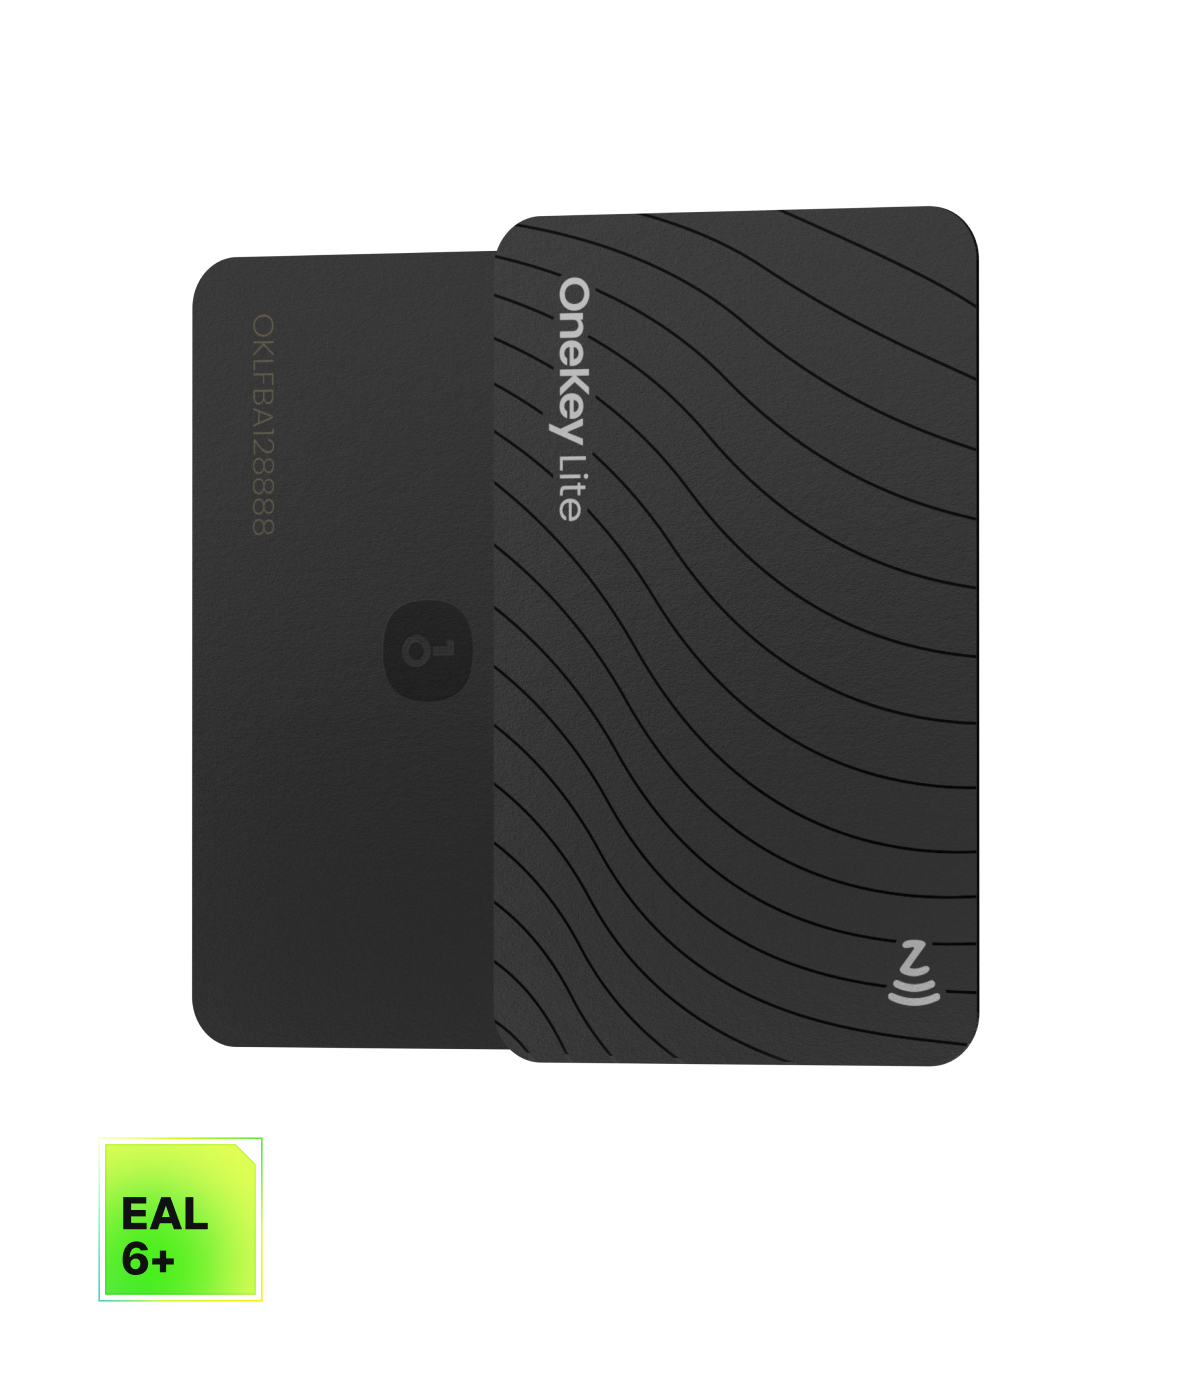 OneKey Lite - リカバリフレーズバックアップカード